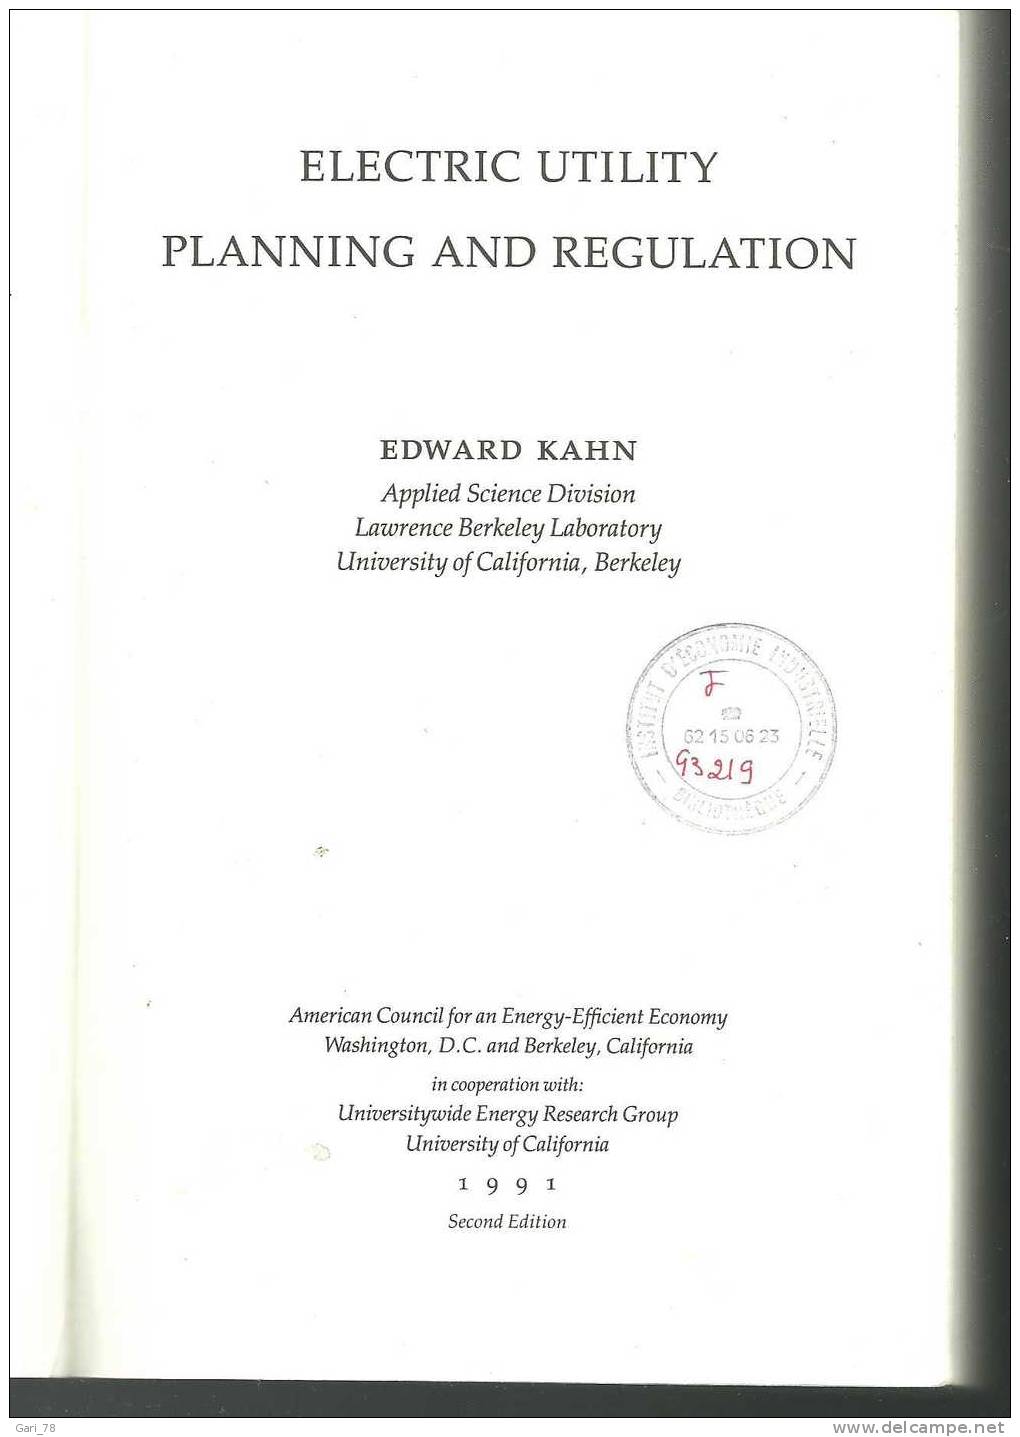 ELECTRIC UTILITY - PLANNING AND REGULATION Par Edward KAHN - Ingenieurswissenschaften